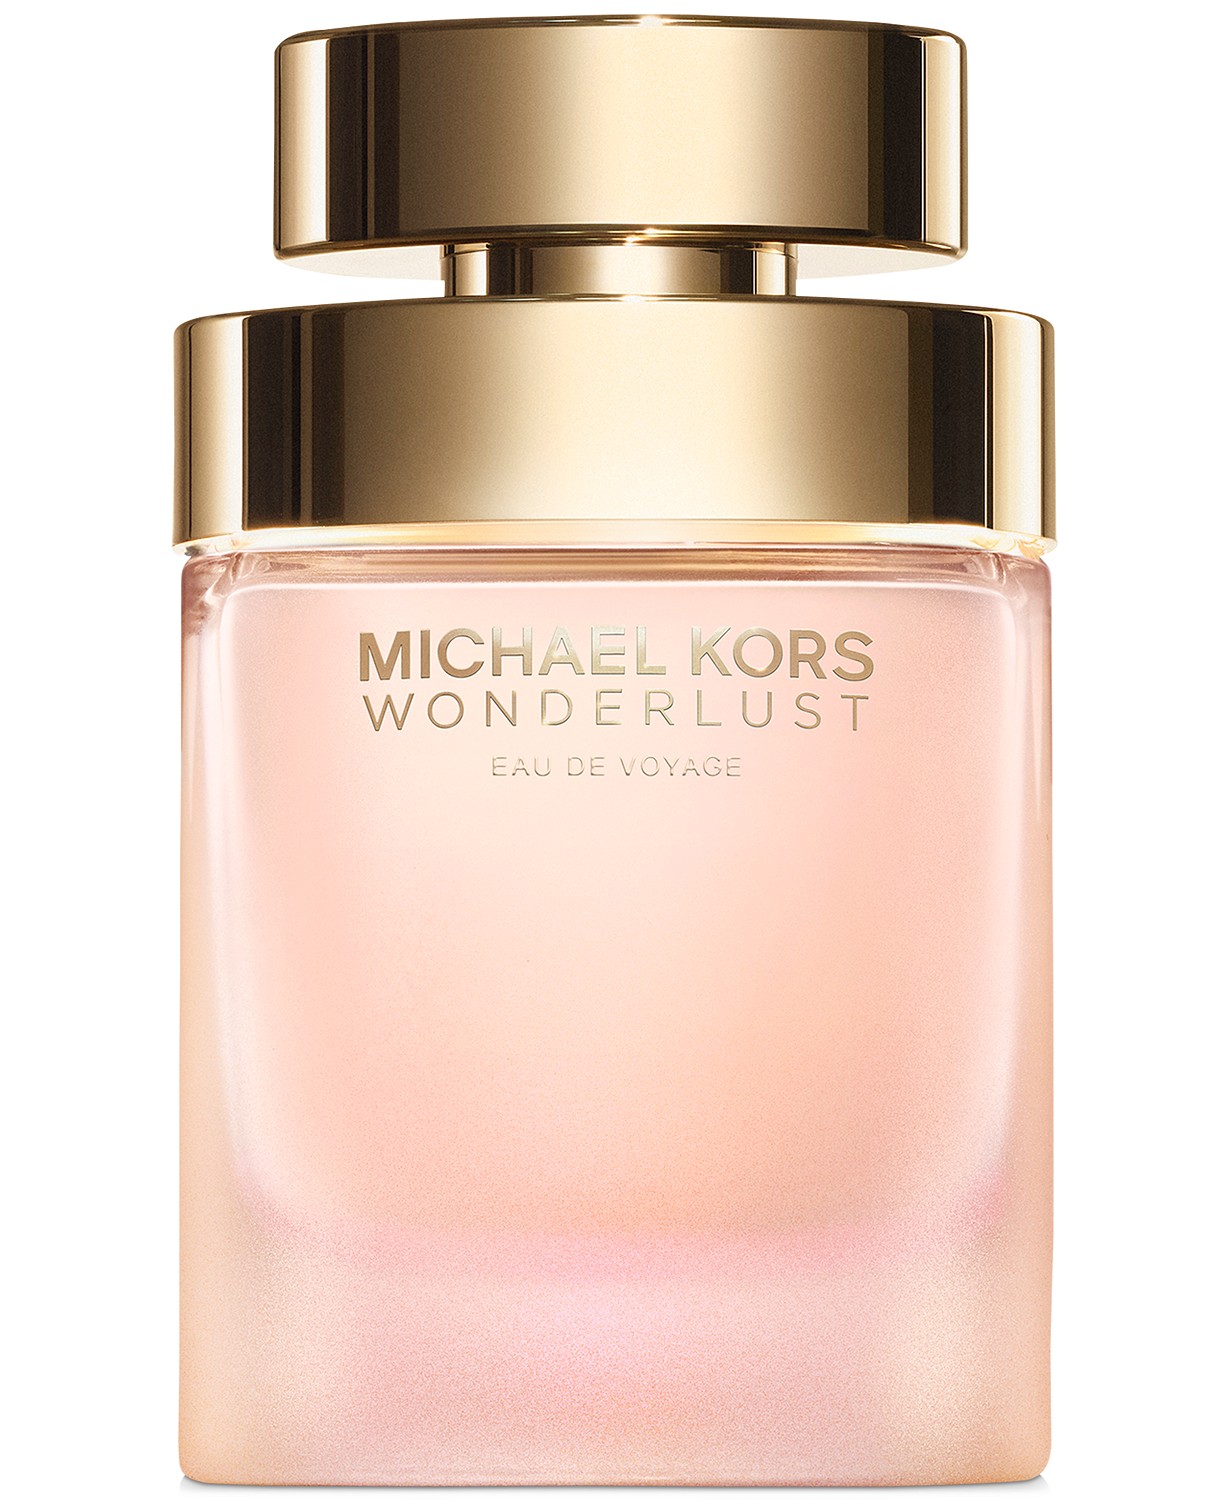 Michael Kors Wonderlust Eau de Voyage Fragrance 3.4-oz. Spray